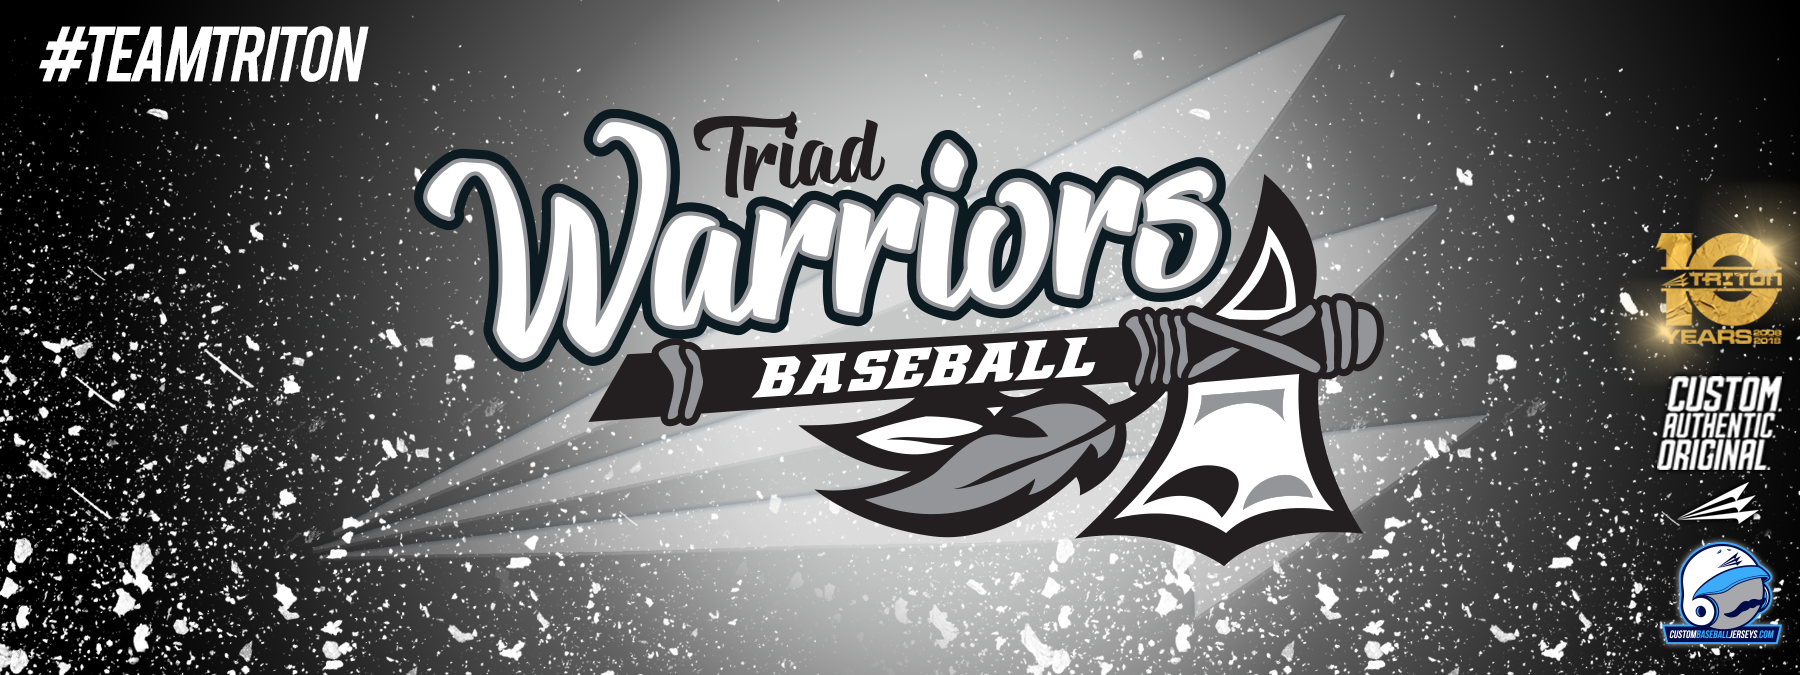 Triad Warriors Custom Camo Baseball Jersey - Triton Mockup Portal